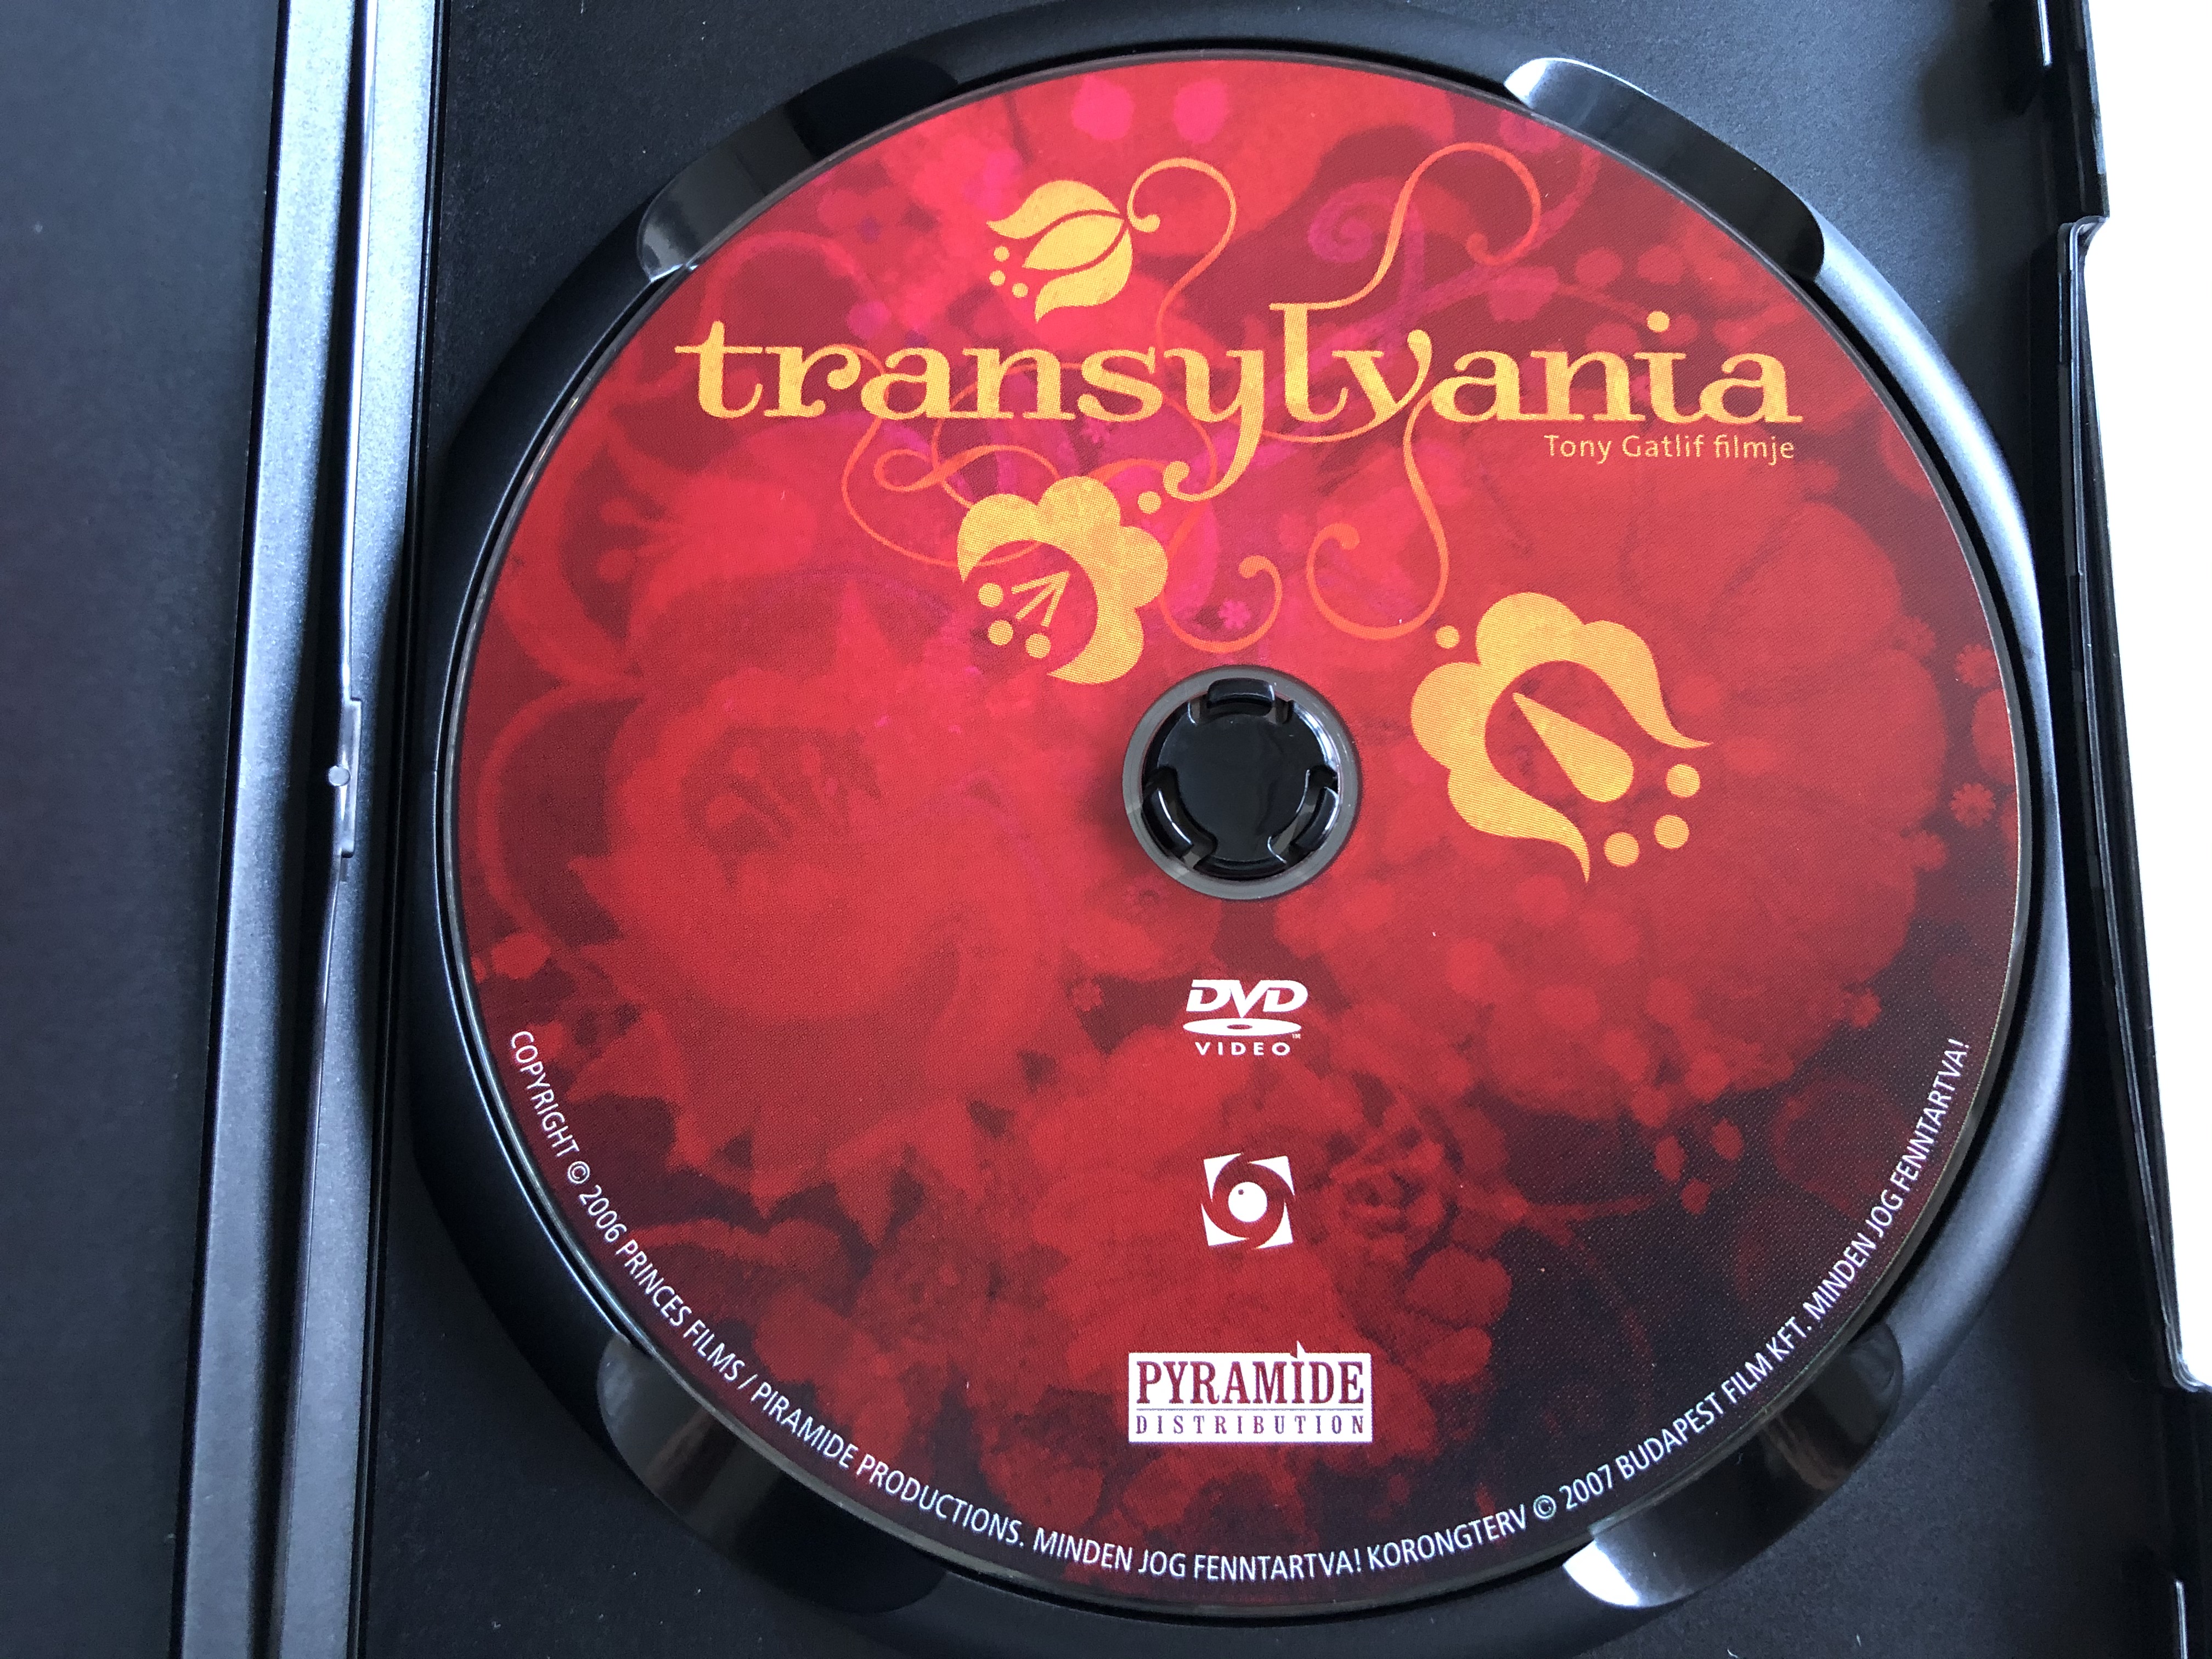 Transylvania DVD 2006 Tony Gatlif filmje 1.JPG